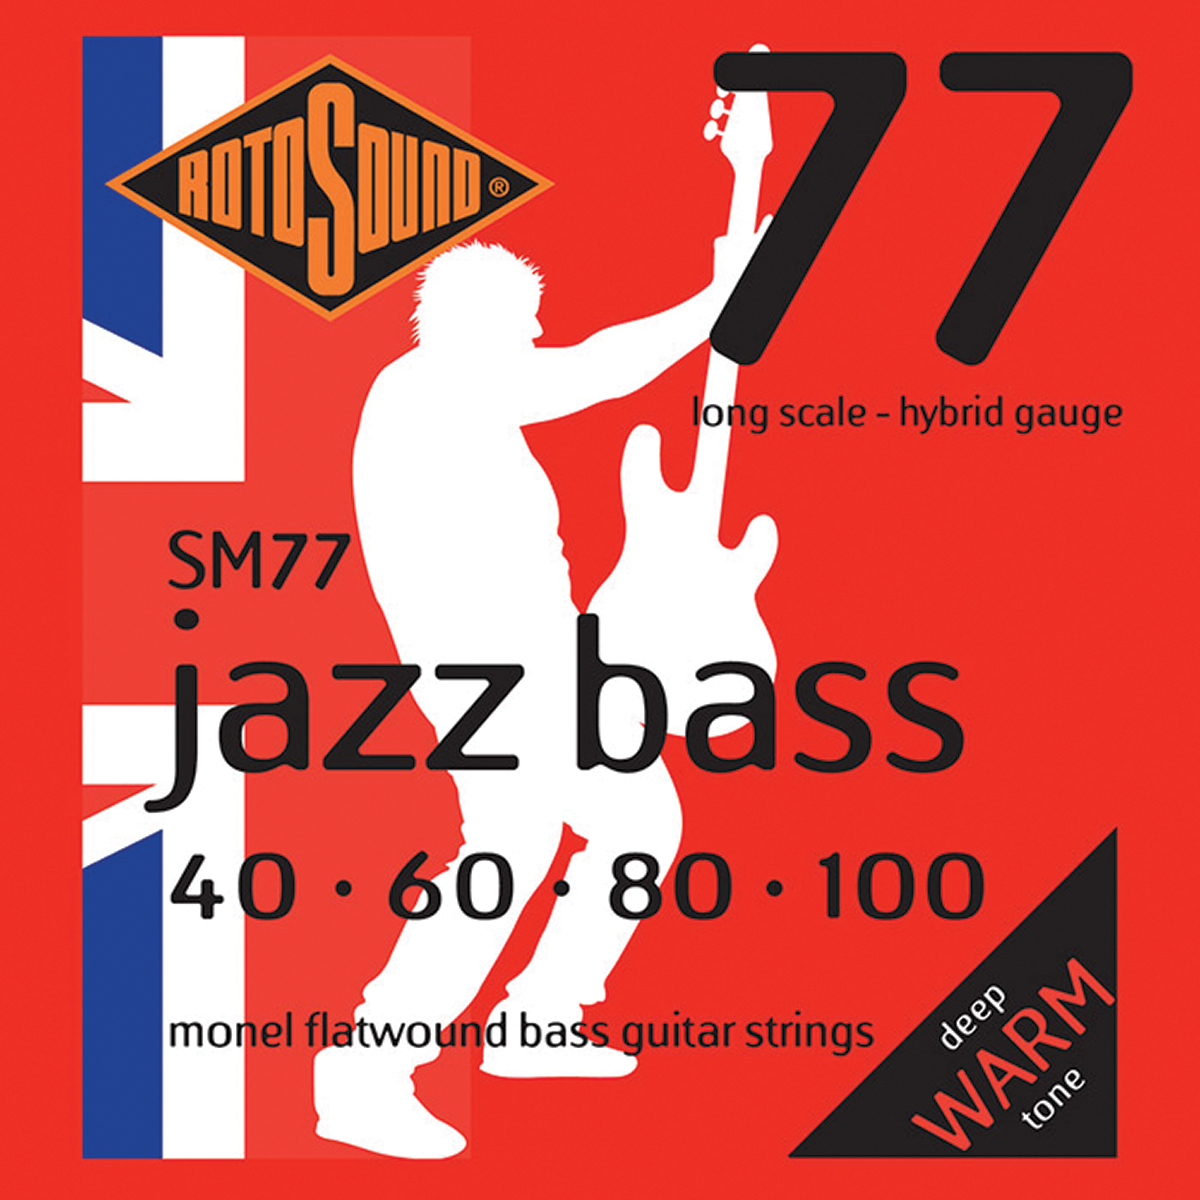 Rotosound RSM77 Jazz Bass 77 hybrid long scale 40 - 100 Monel